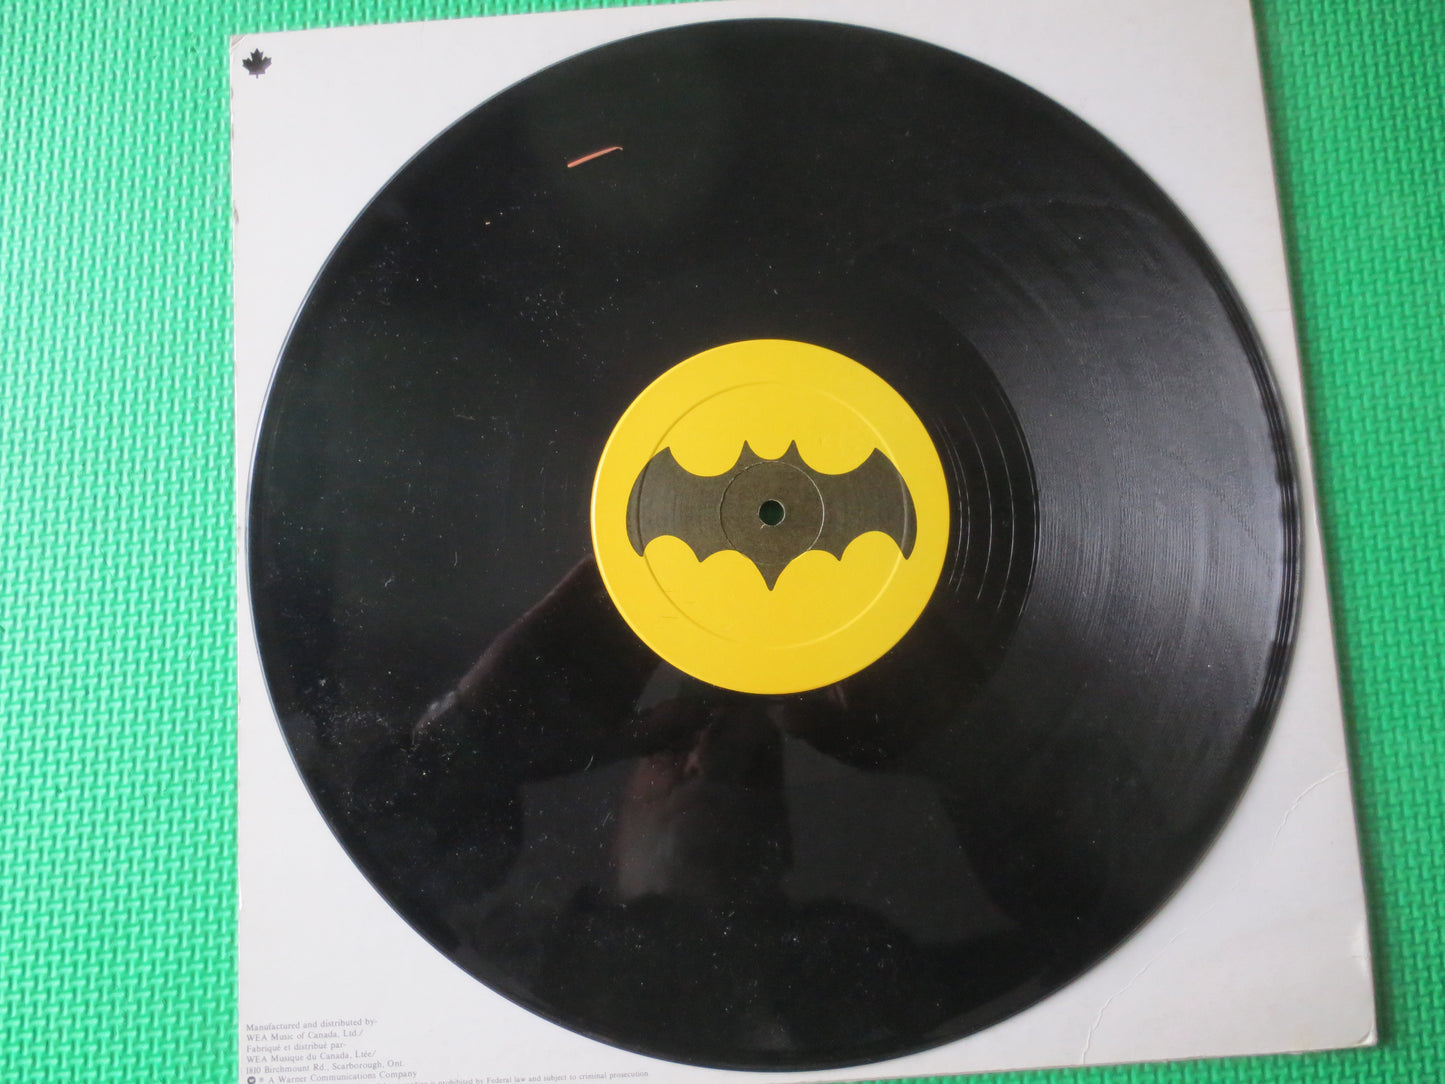 BATMAN, EMILIO PASQUEZ, Vintage Vinyl, Record Vinyl, Batman Record, Vinyl Record, Vinyl lps, lps, Rock Record, 1988 Records